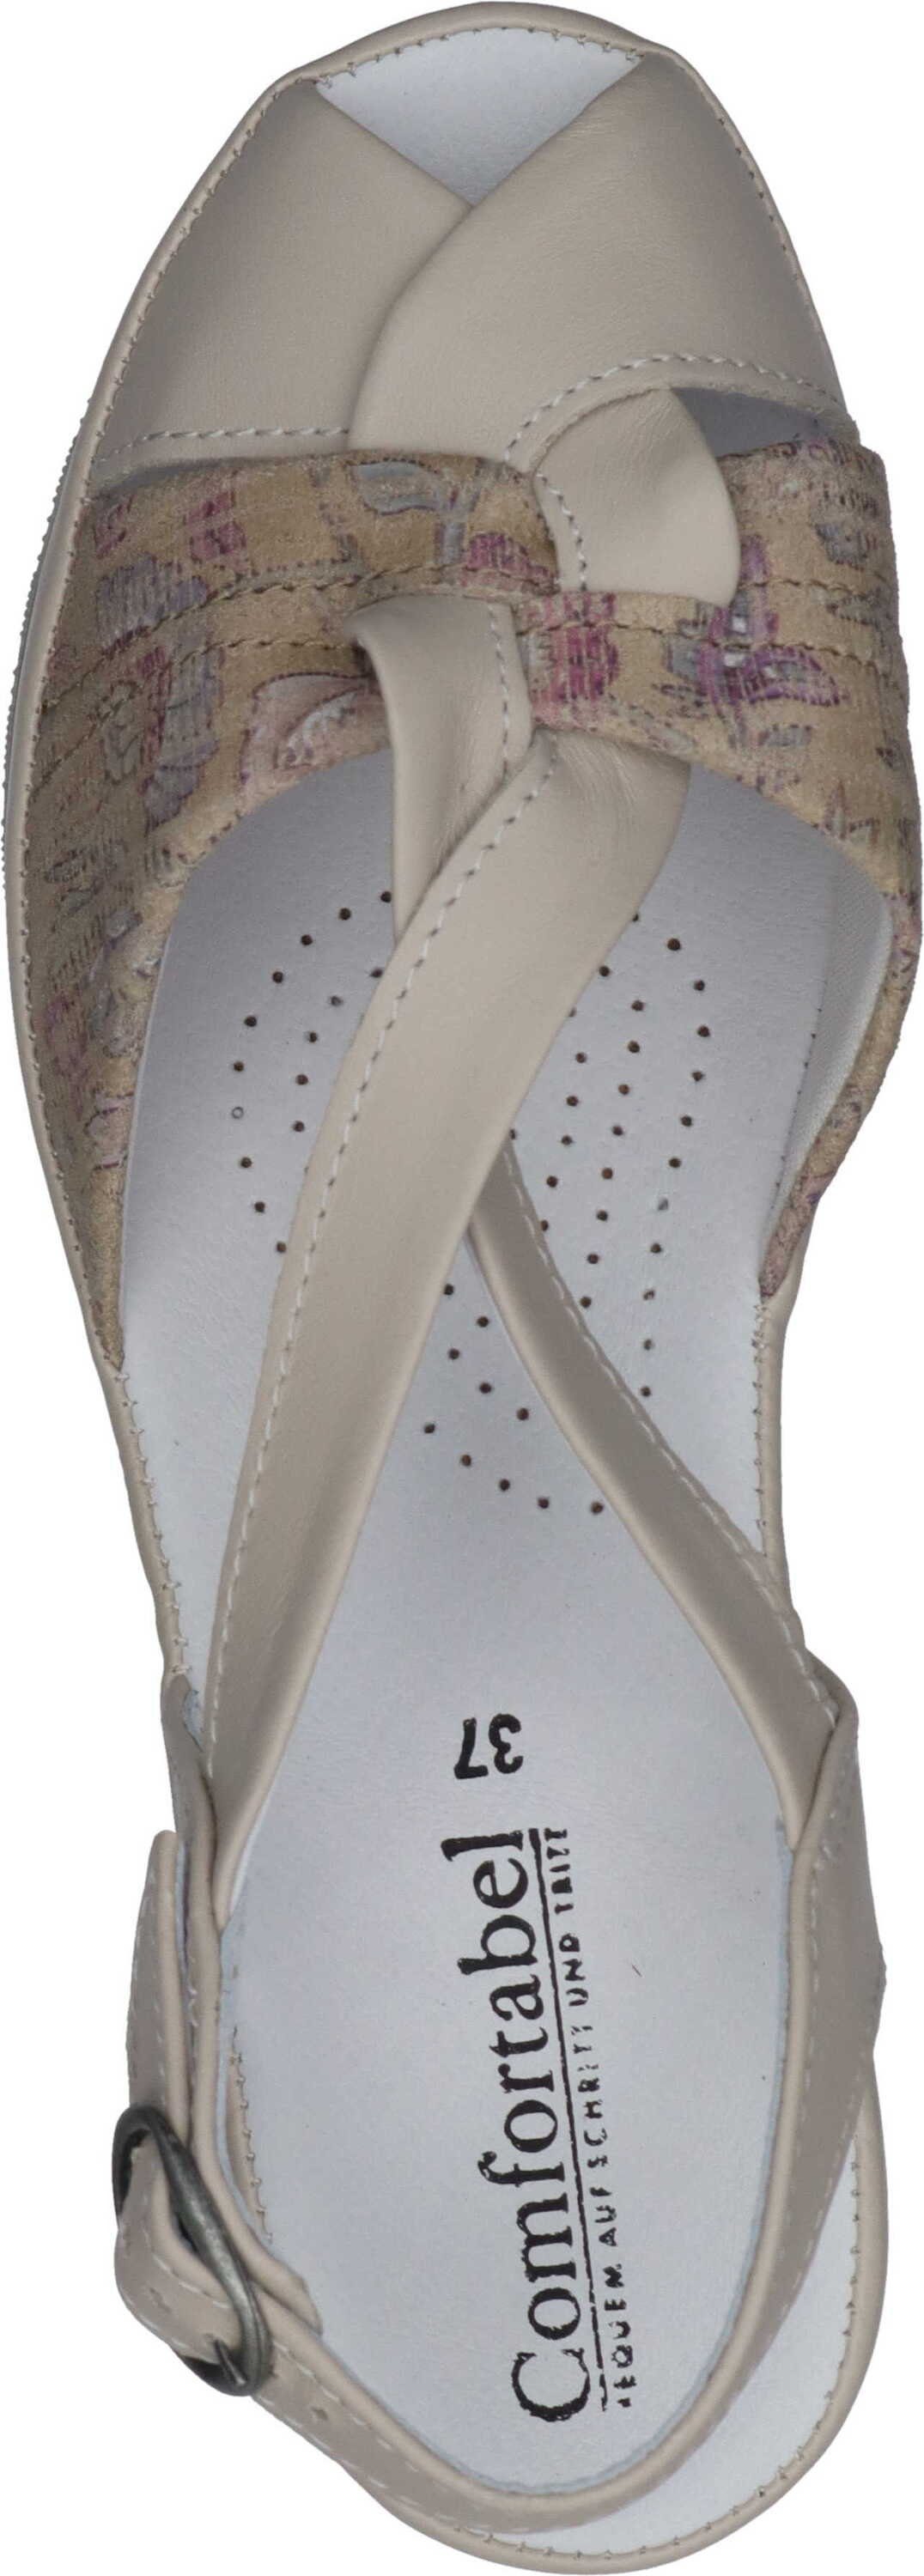 Comfortabel Sandale beige Veloursleder Sandalen aus